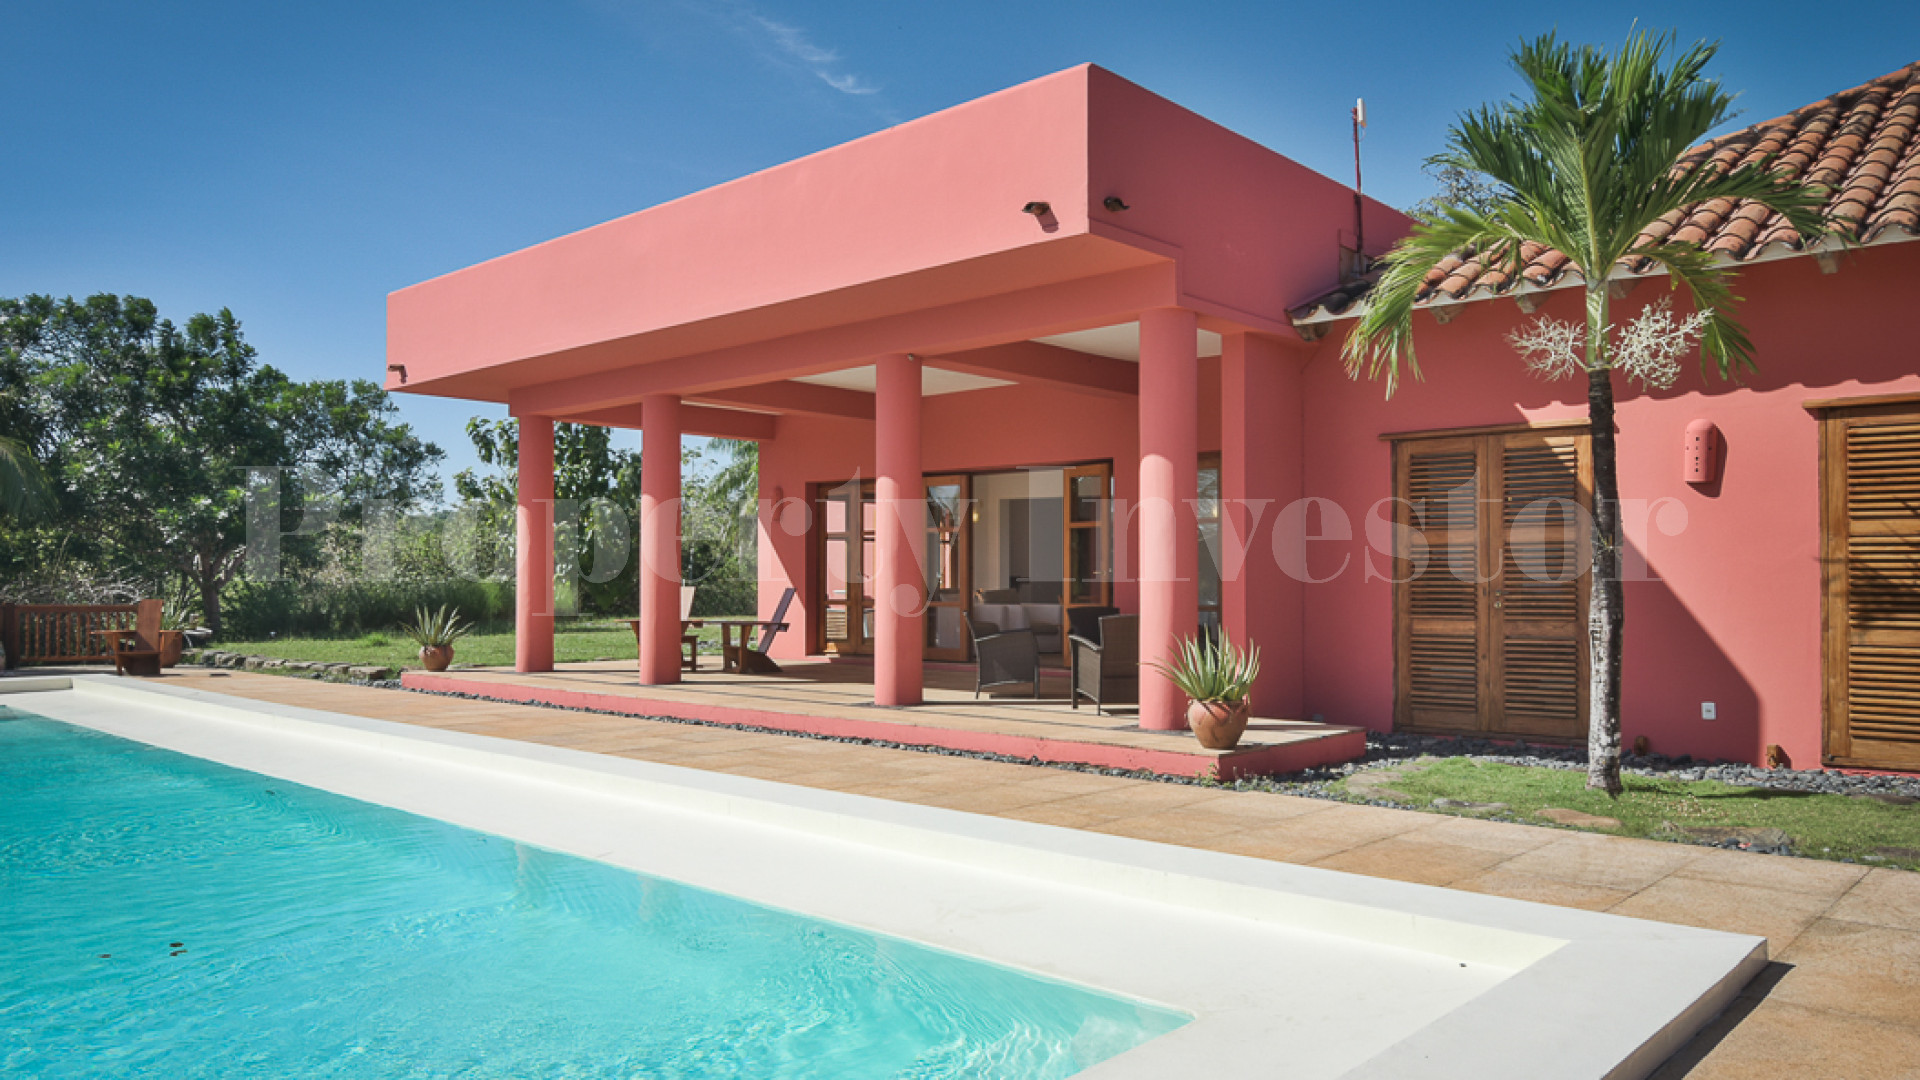 Bright 4 Bedroom Luxury Ocean View Designer Villa for Sale in Pedasi, Panama